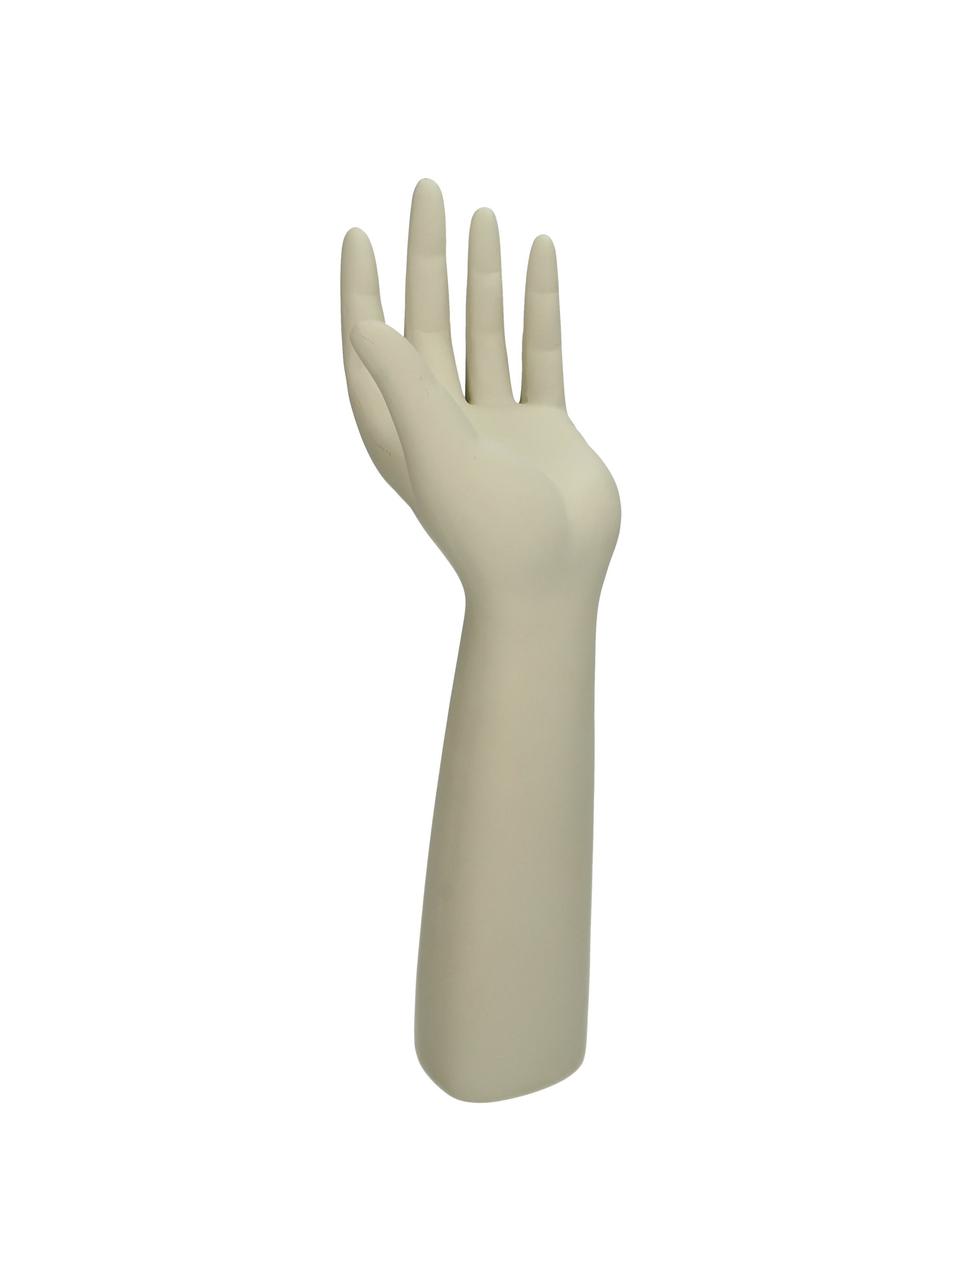 Decoratief object Hand, Polyresin, Beige, B 12 cm x H 38 cm